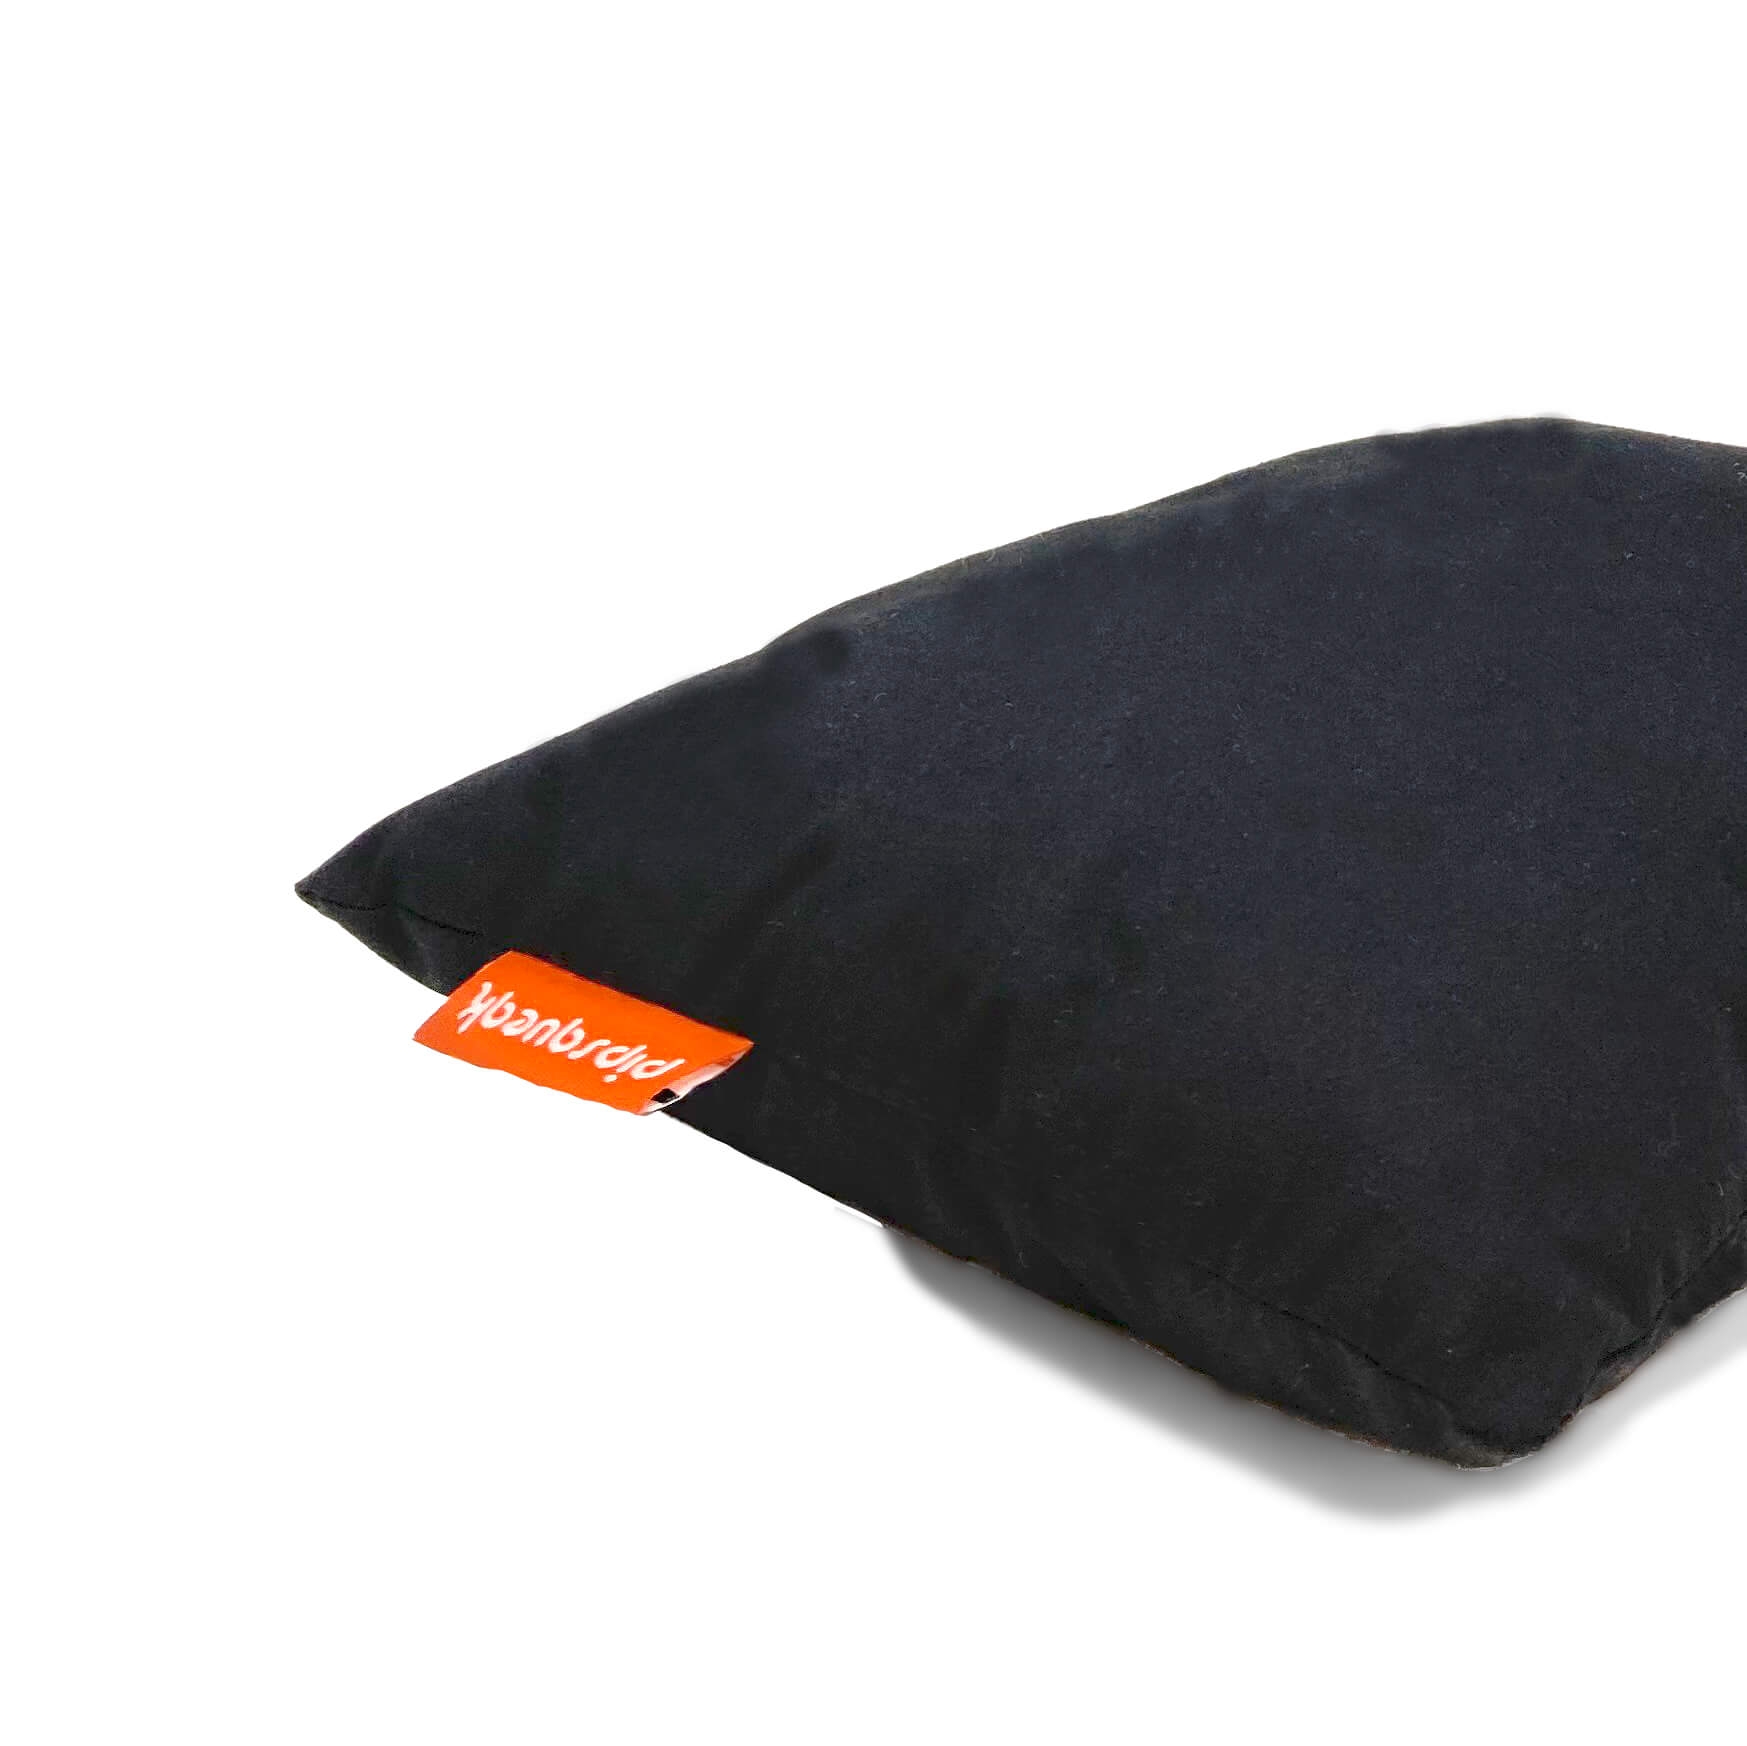 Pipsqueak® Tiny Washable Pillow